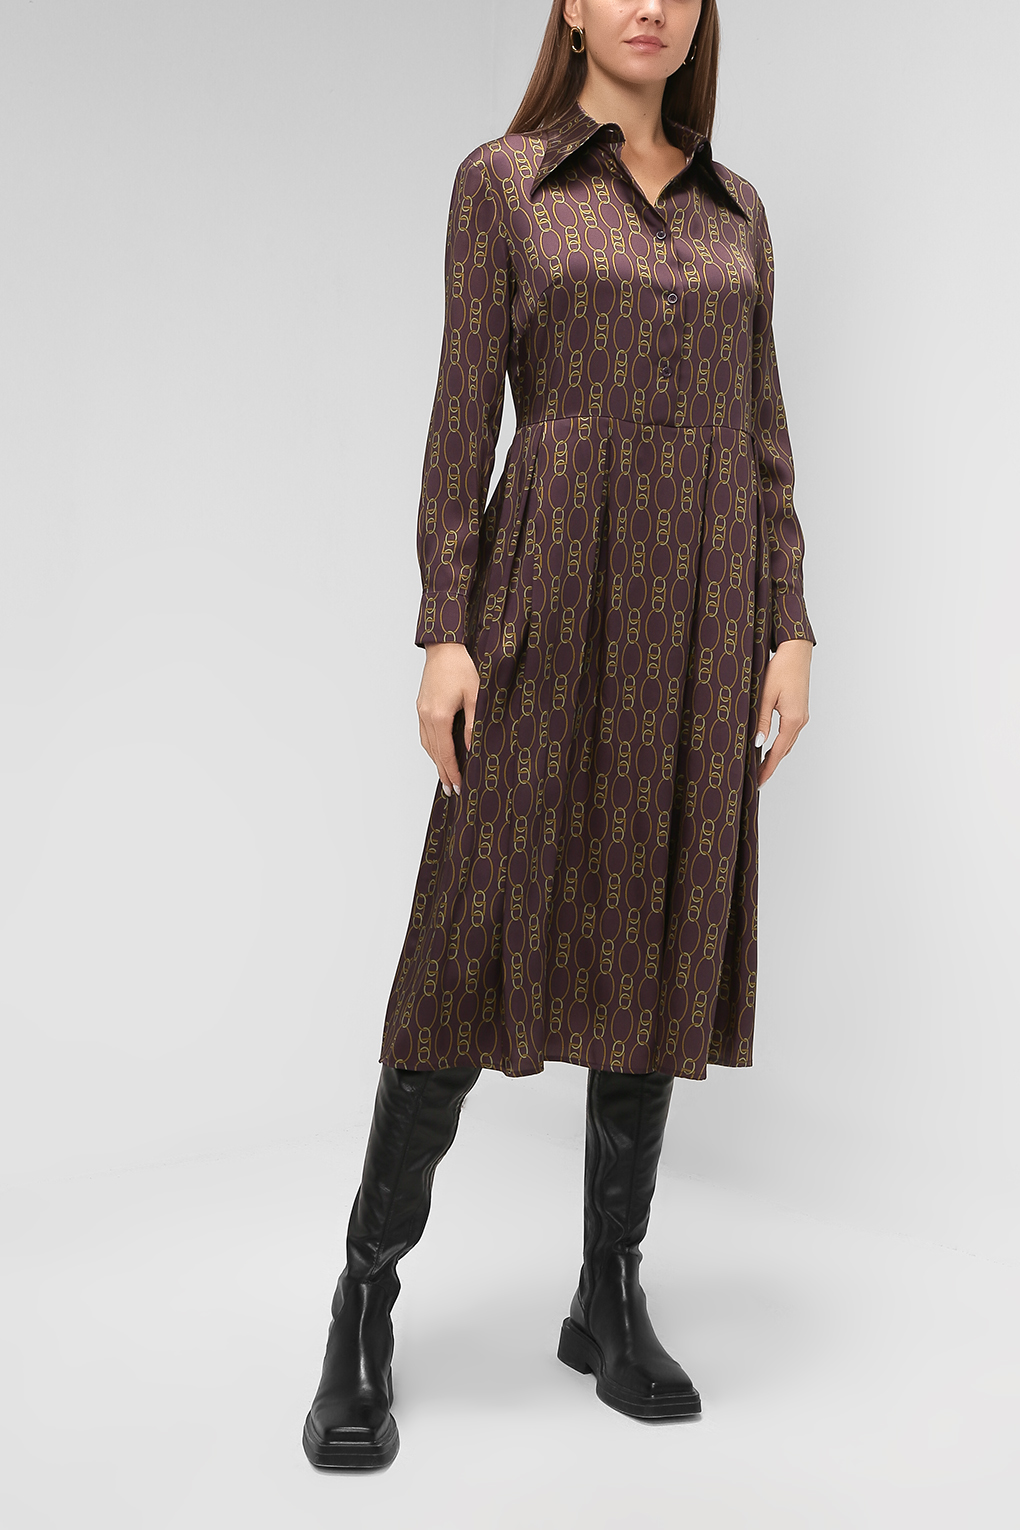 фото Платье женское paola ray pr220-3090-01 коричневое s